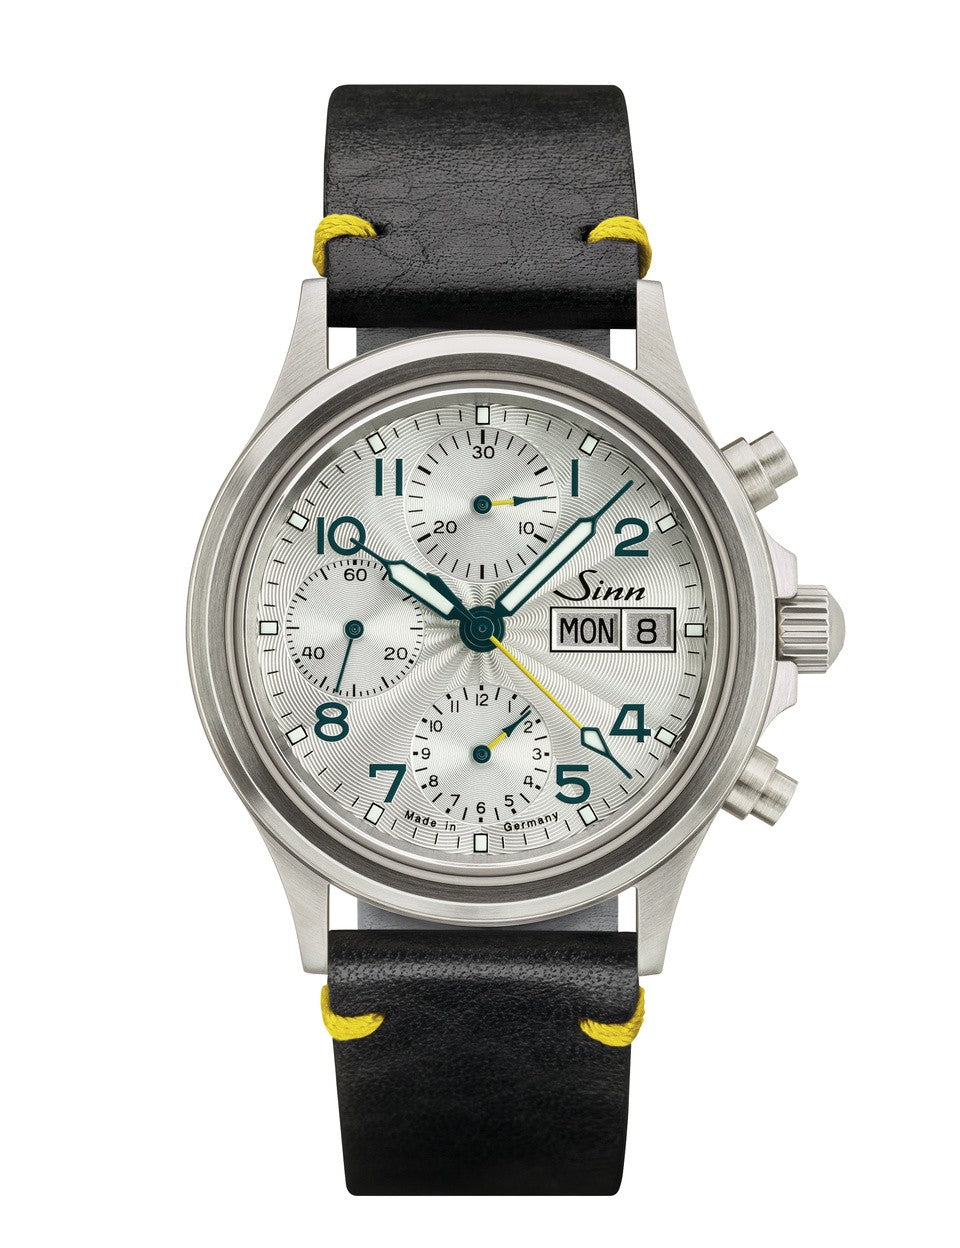 [Pre-Order] Sinn (ซินน์) นาฬิกาโครโนกราฟ 356 Sa PILOT III Commerzbank สายสแตนเลสสตีลและหนัง ขนาดตัวเรือน 38.5 มม. (356 Sa FLIEGER III Commerzbank)